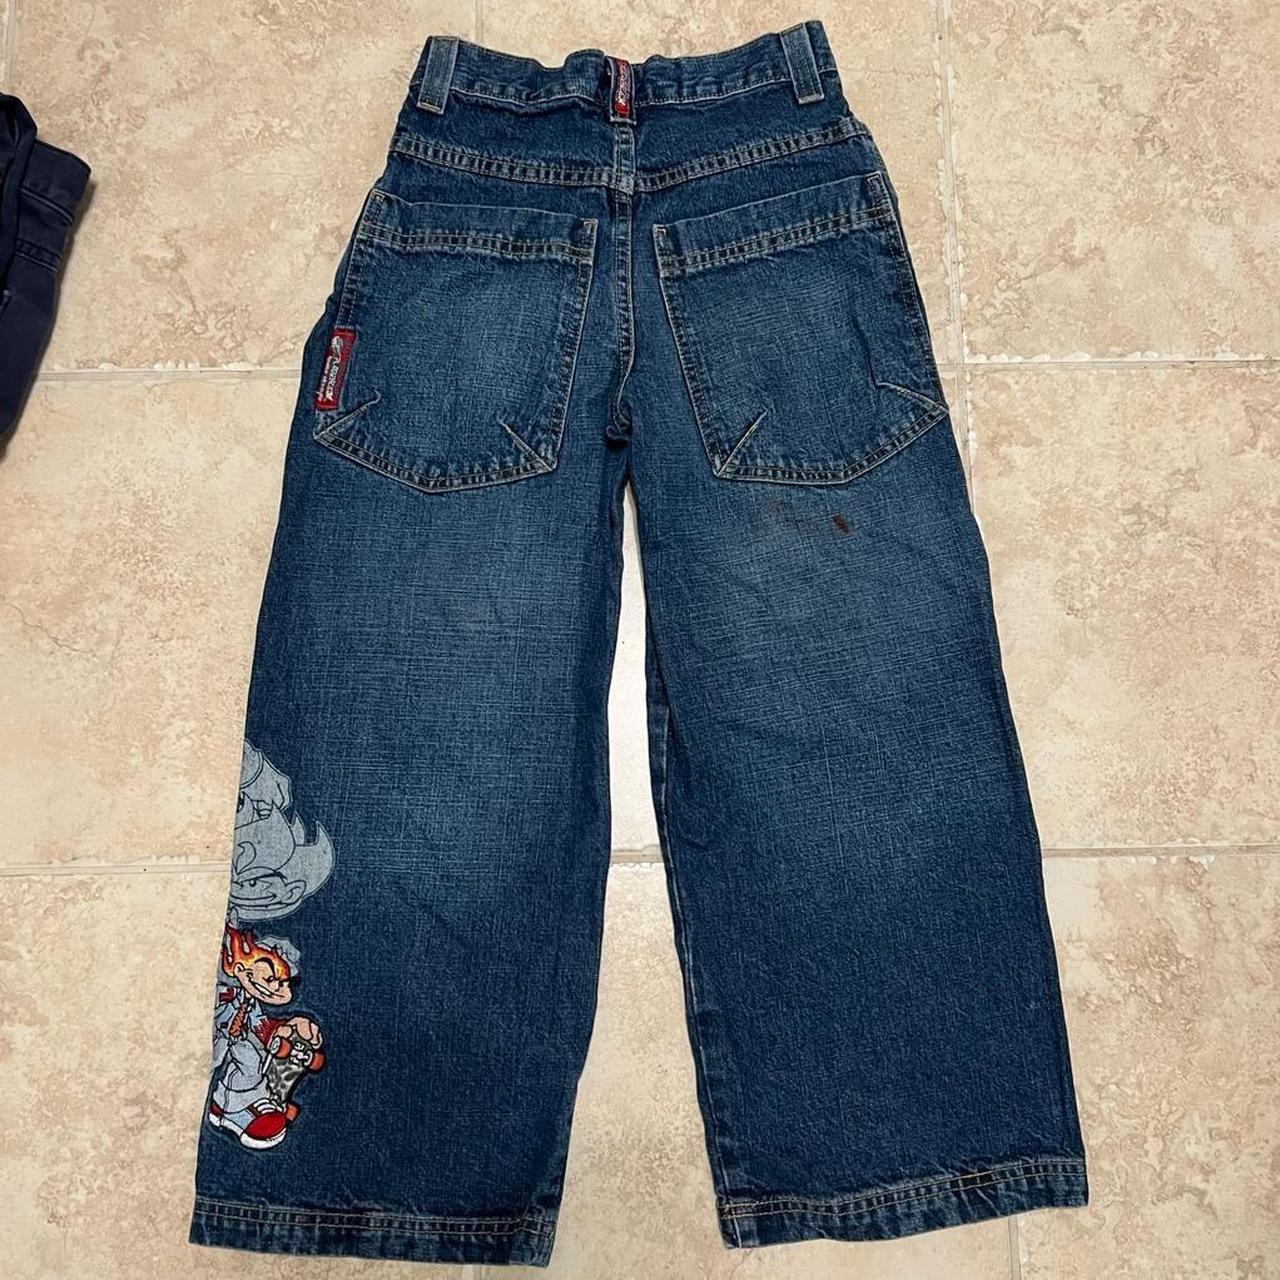 Vintage JNCO Flamehead Jeans Size 8 As seen in... - Depop